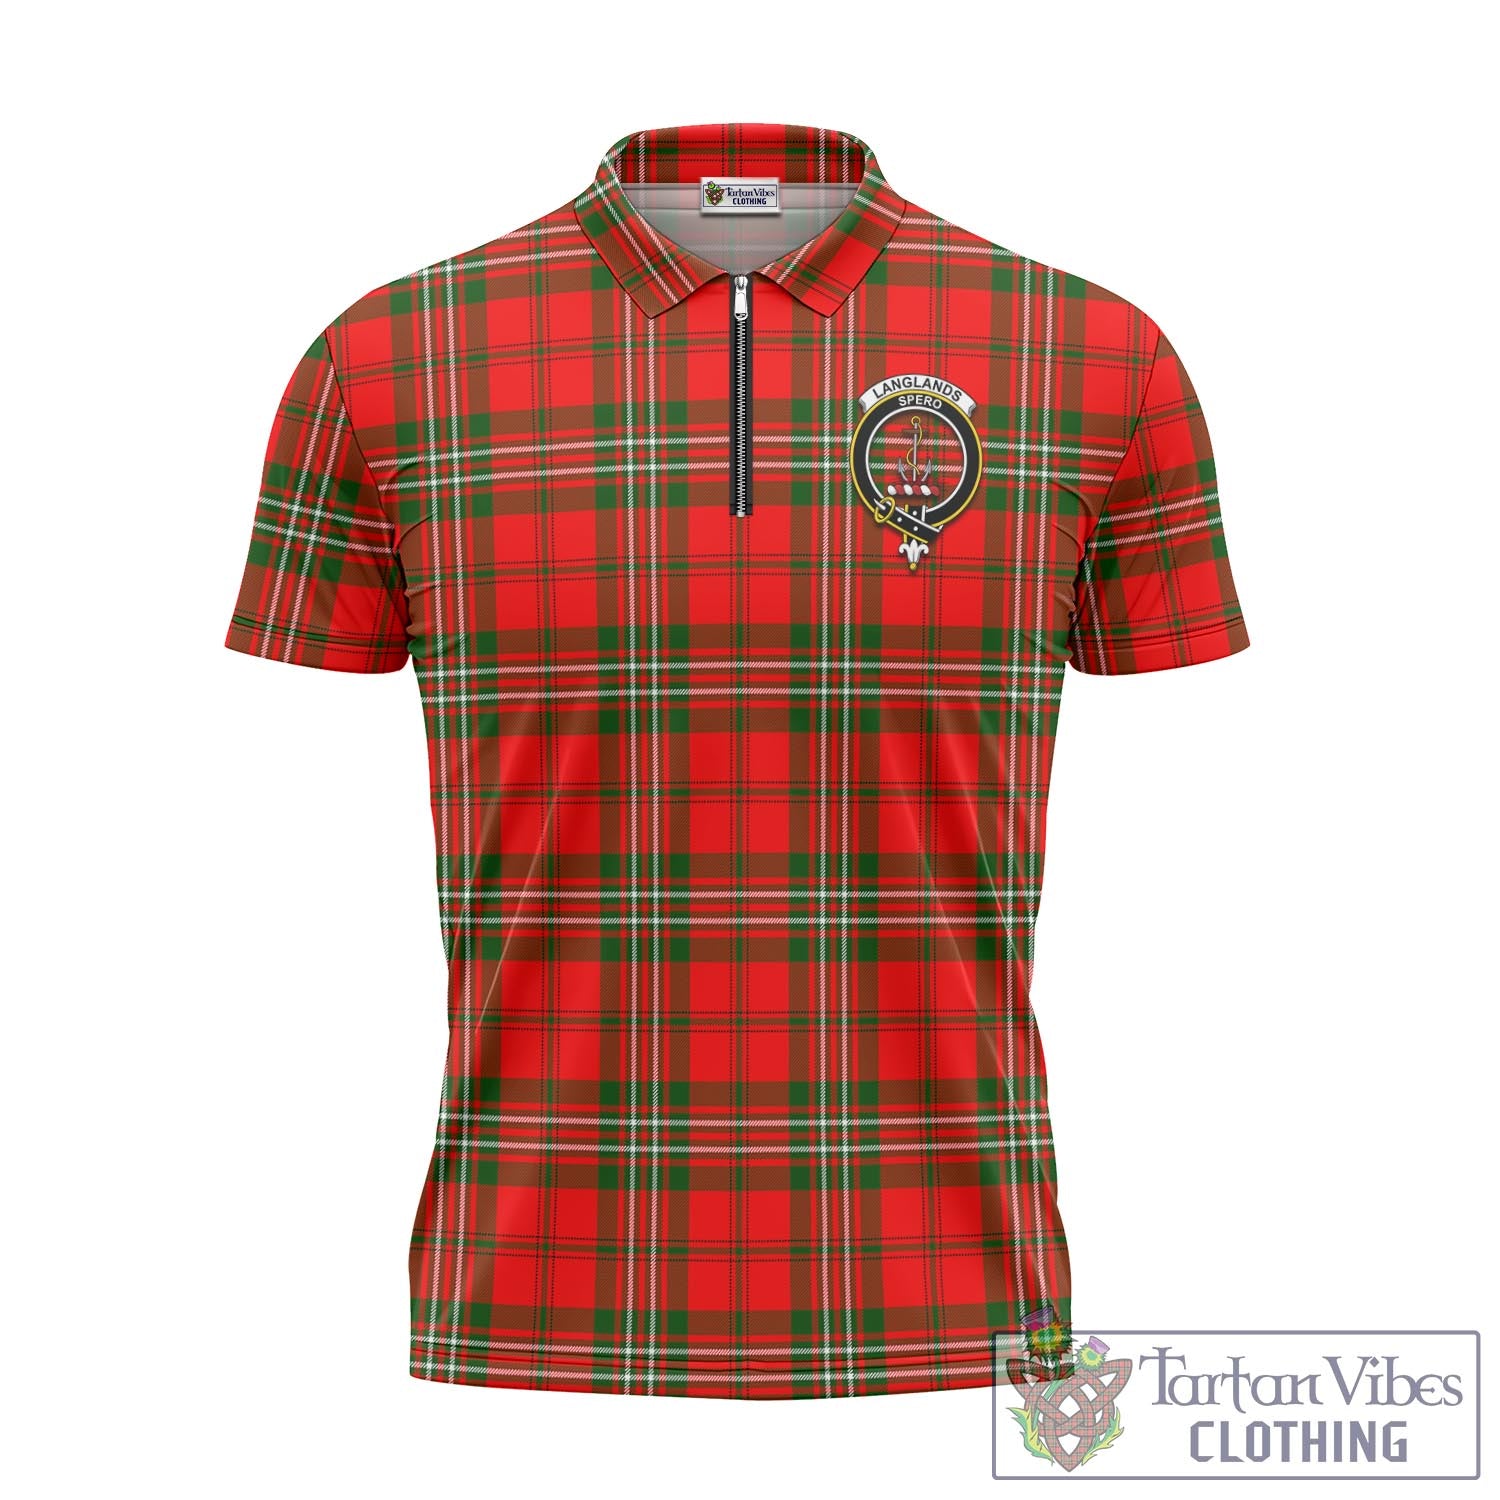 Tartan Vibes Clothing Langlands Tartan Zipper Polo Shirt with Family Crest